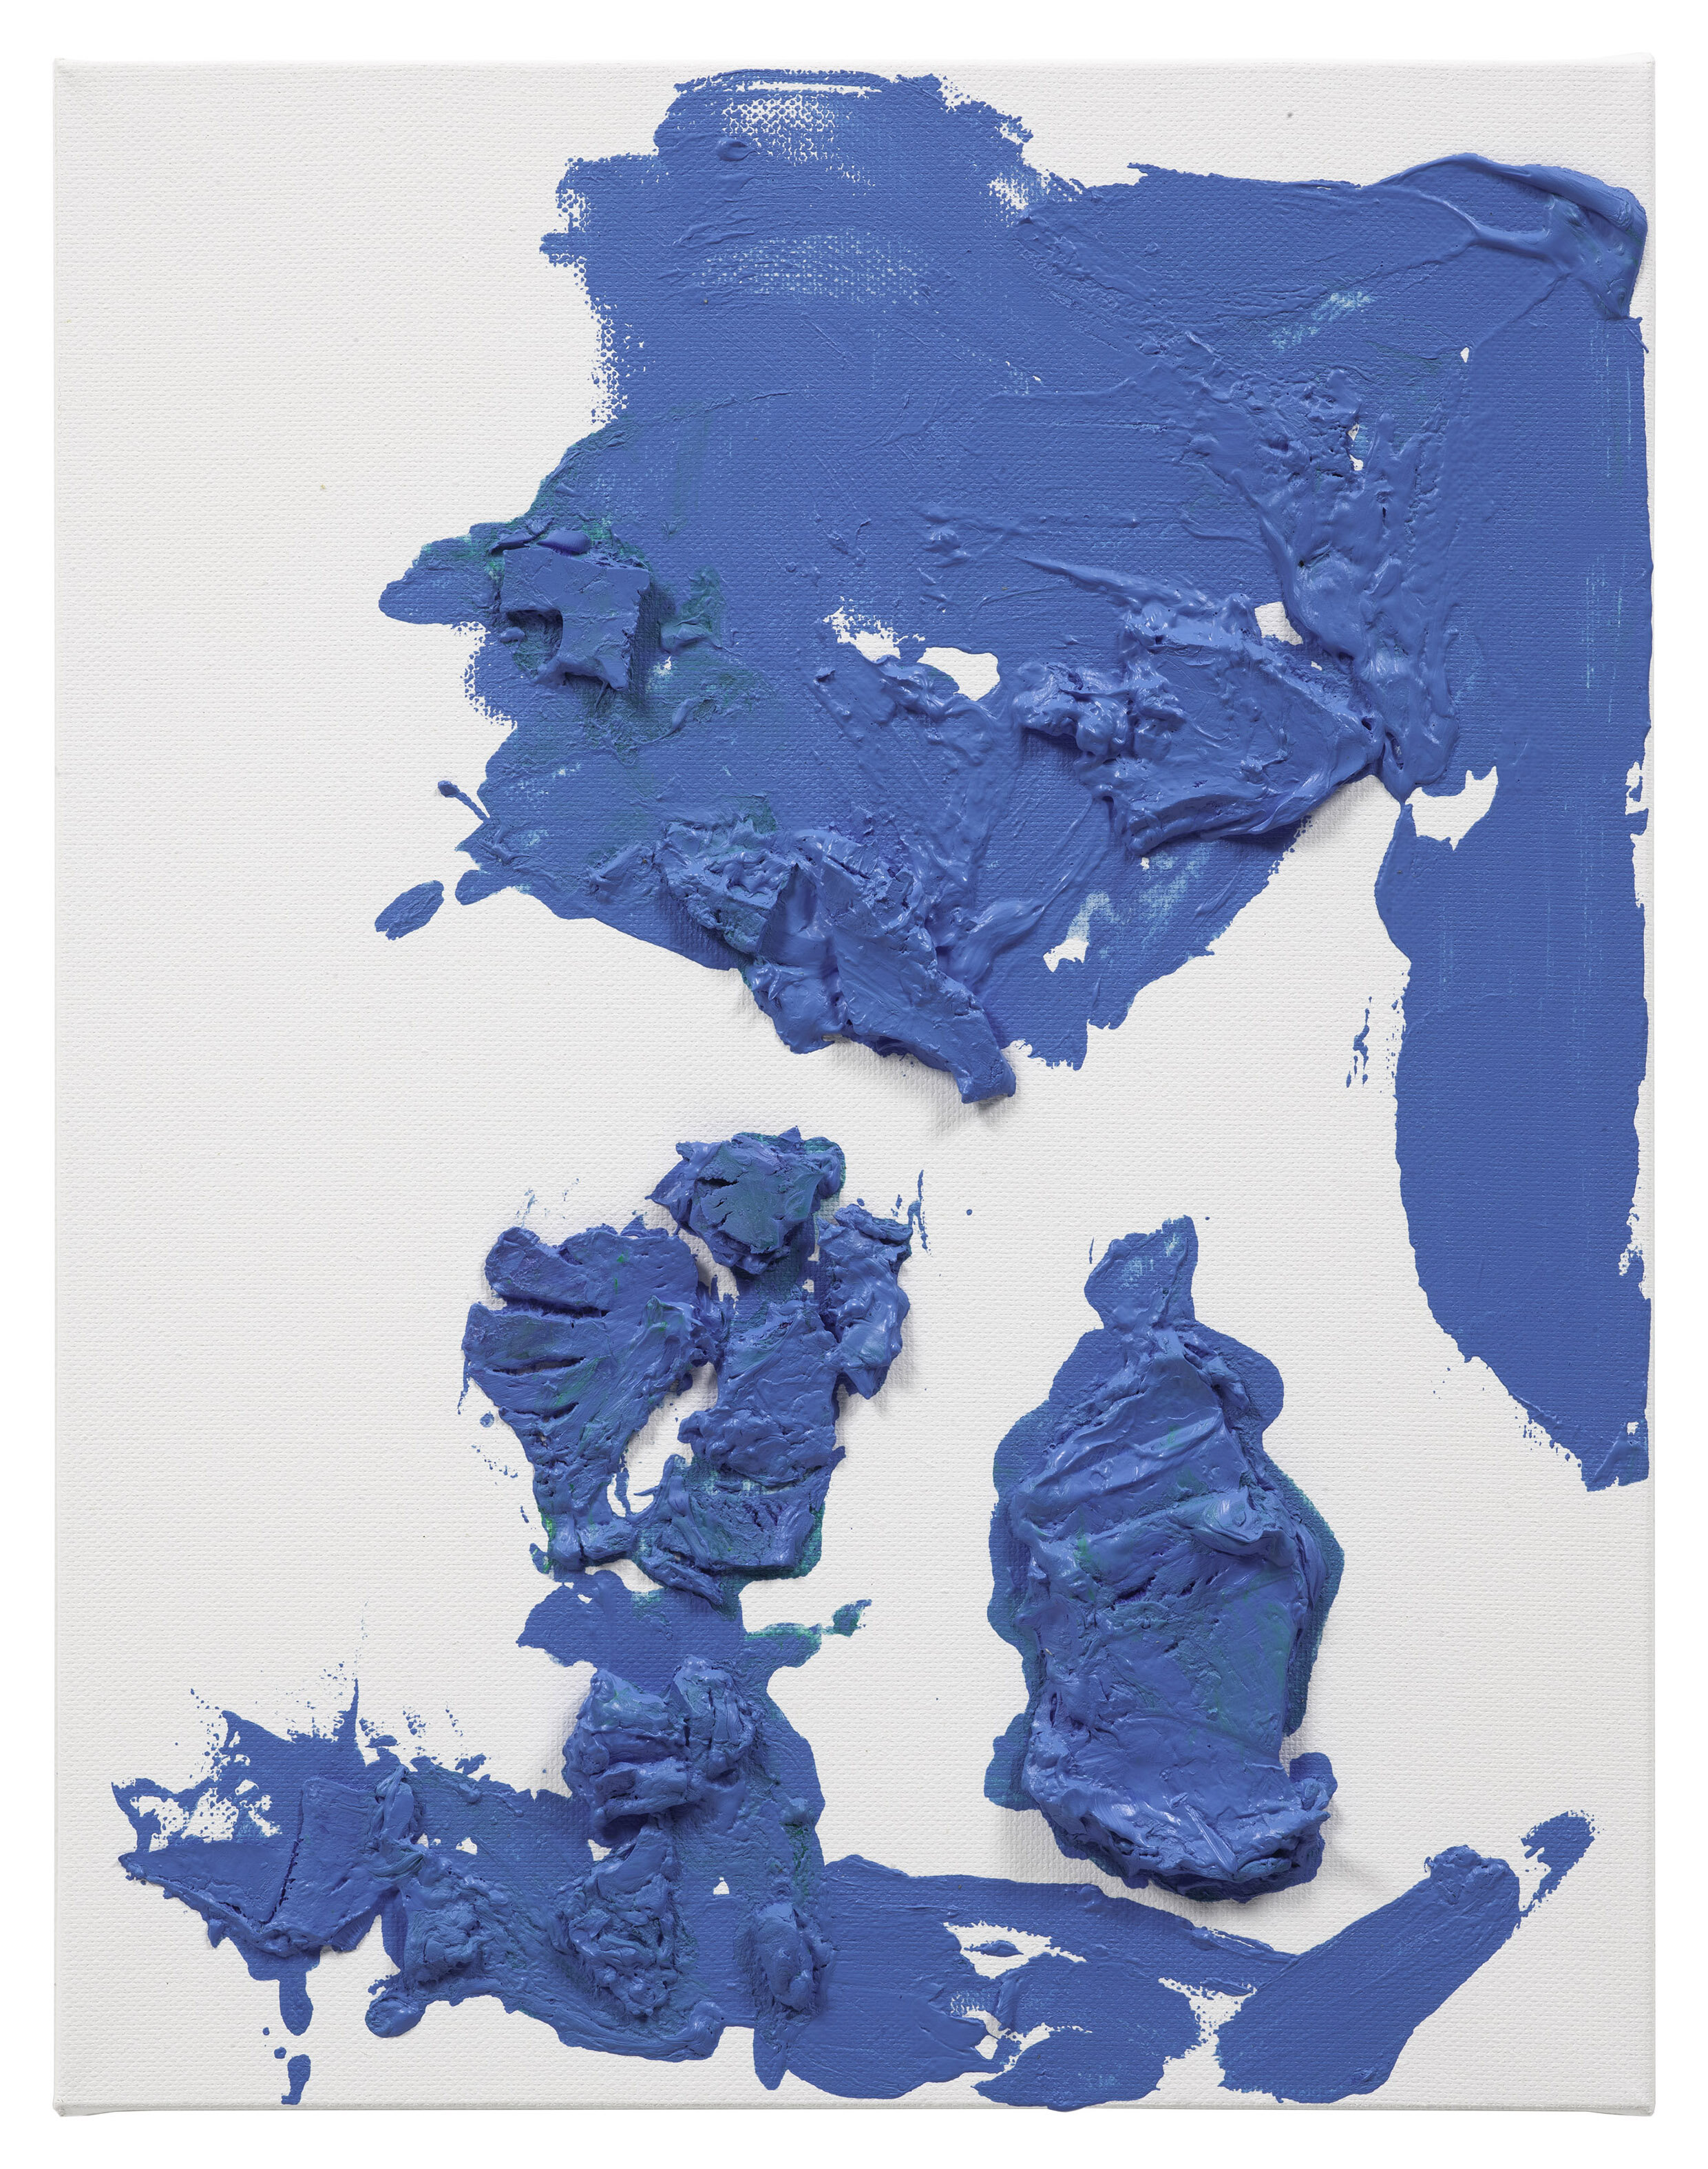  Drew Beattie  Chunky Blue   2020 acrylic on canvas   14 x 11 inches  